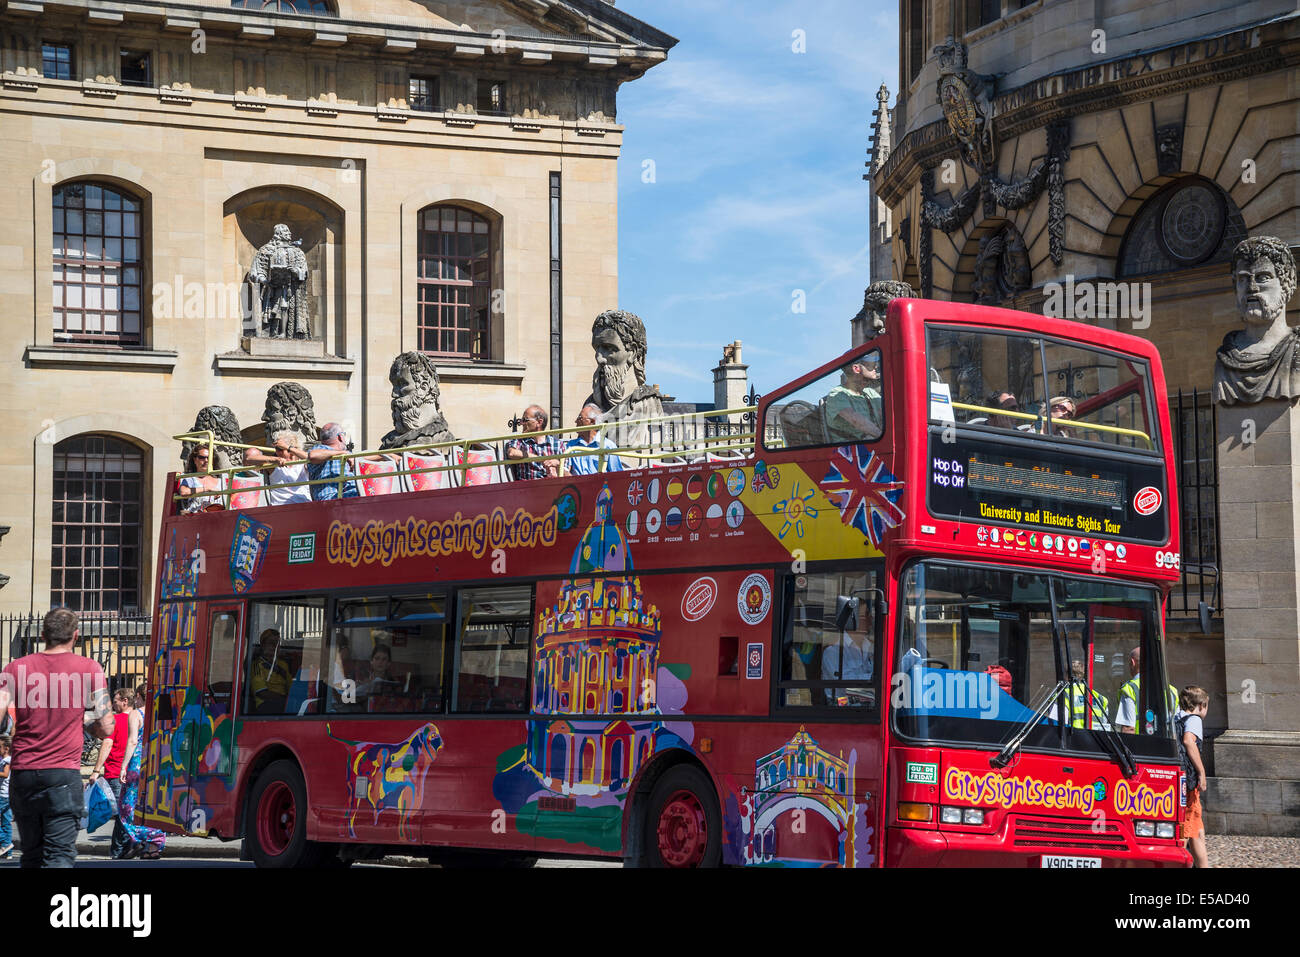 Sightseeing bus touristique en face de Sheldonian Theatre, Broad Street, Oxford, England, UK Banque D'Images